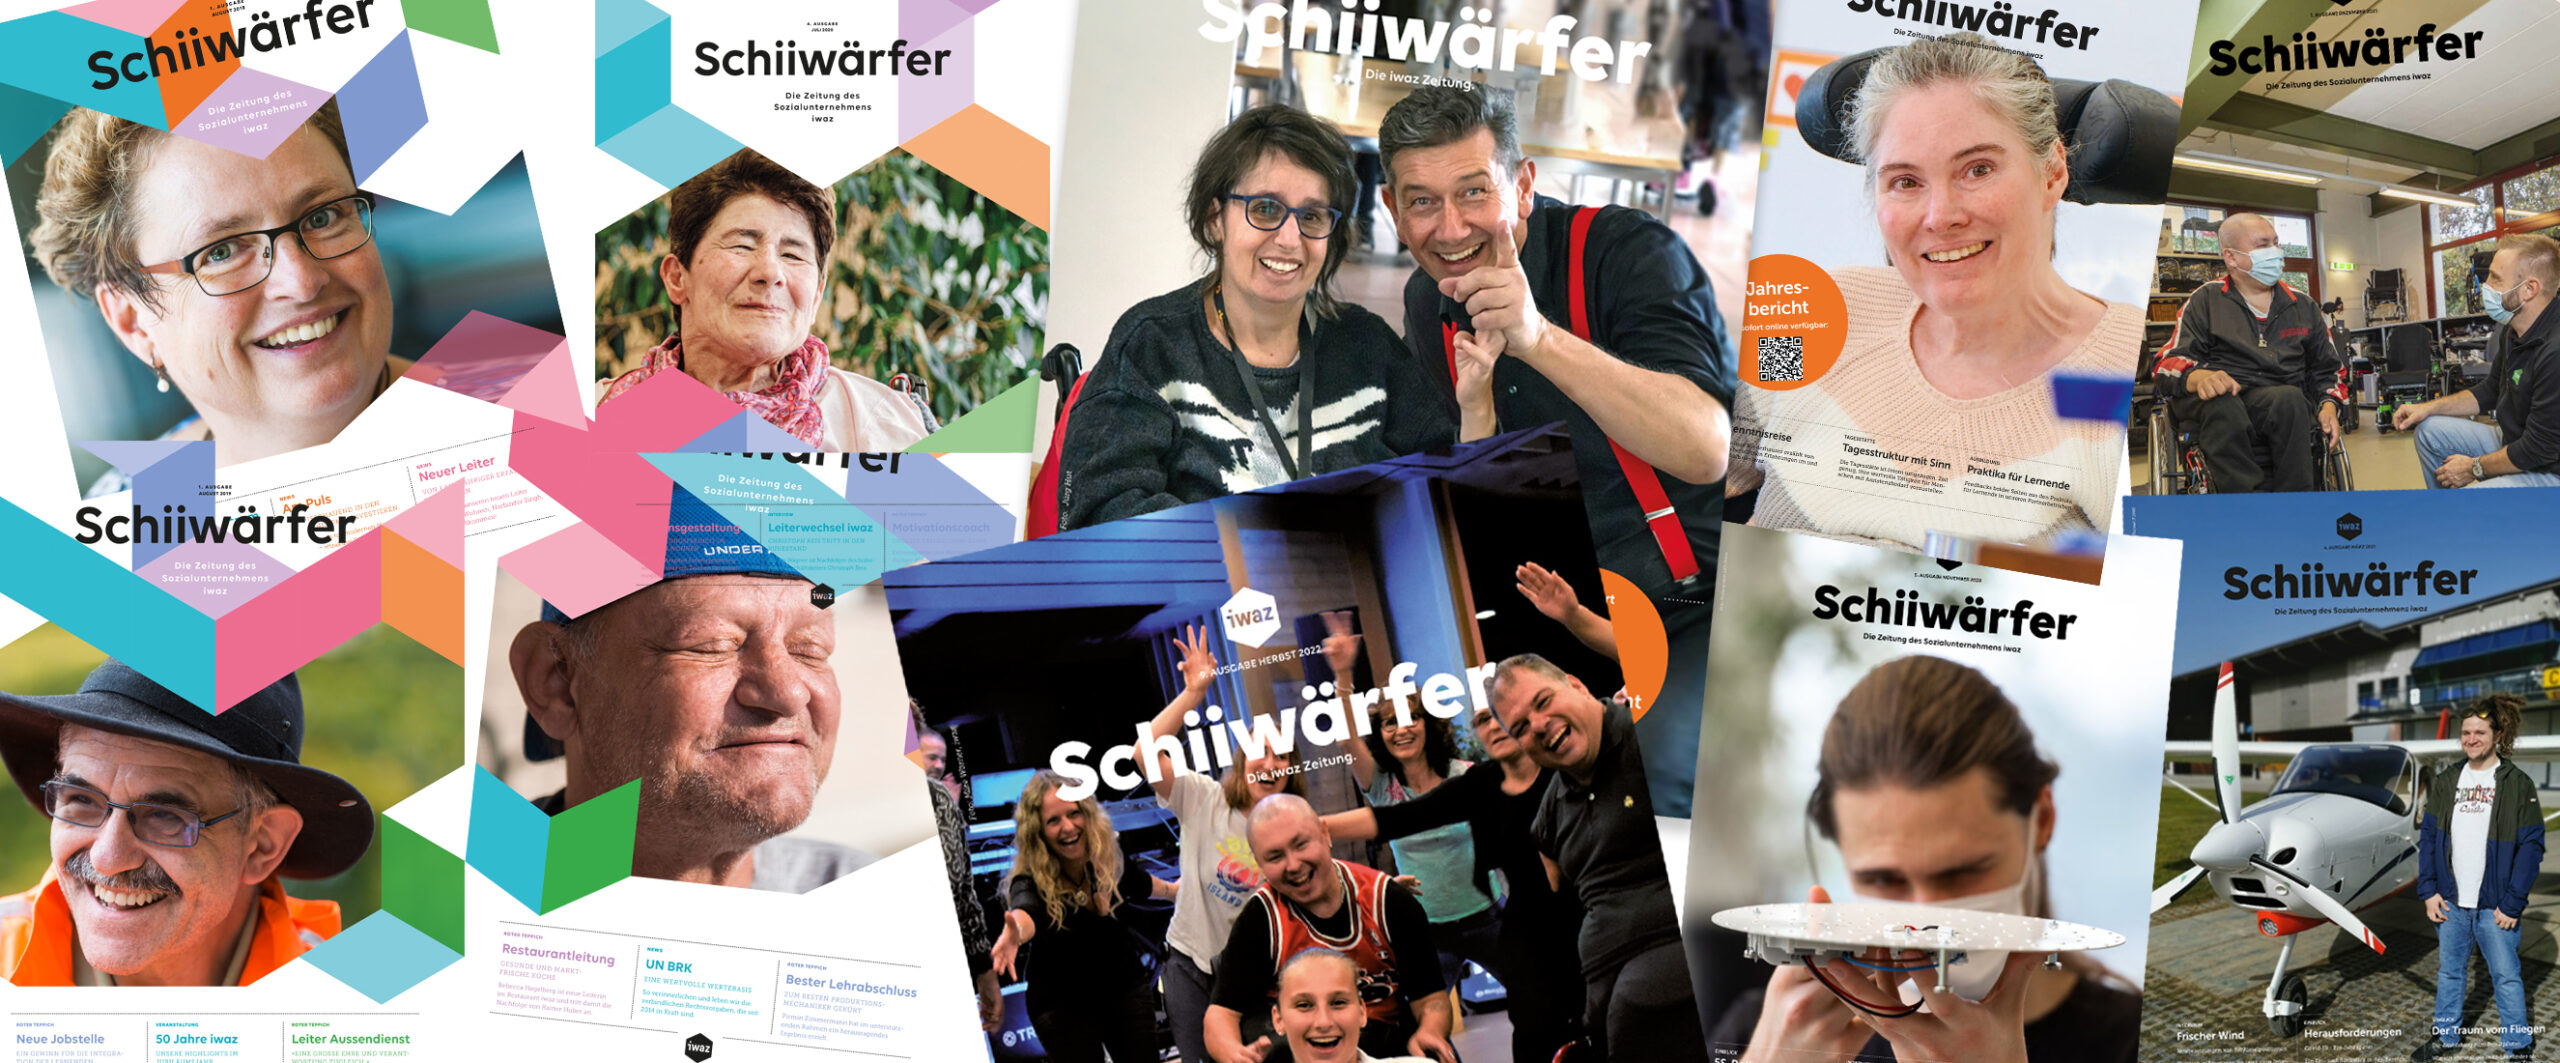 iwaz-News-Schiiwaerfer-Header2640x1100